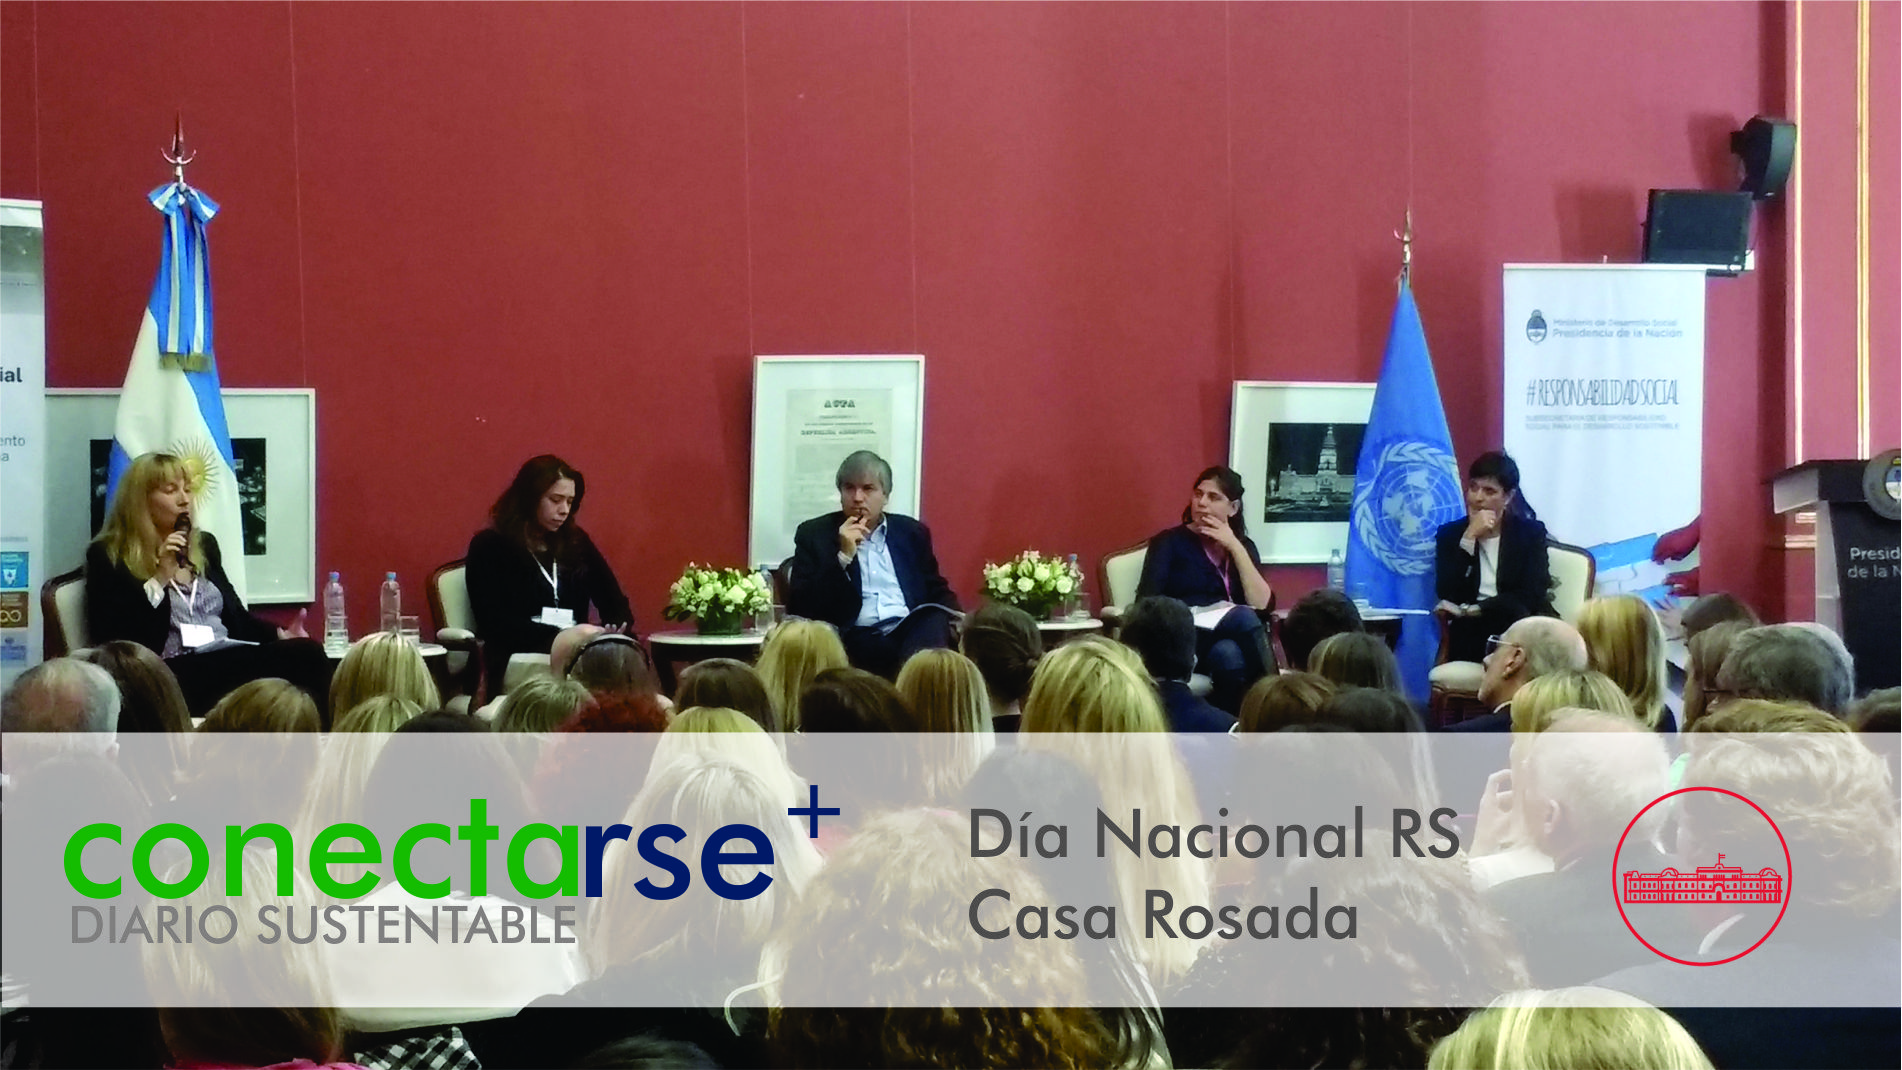 Se celebró el 1º Día Nacional de la Responsabilidad Social en Argentina